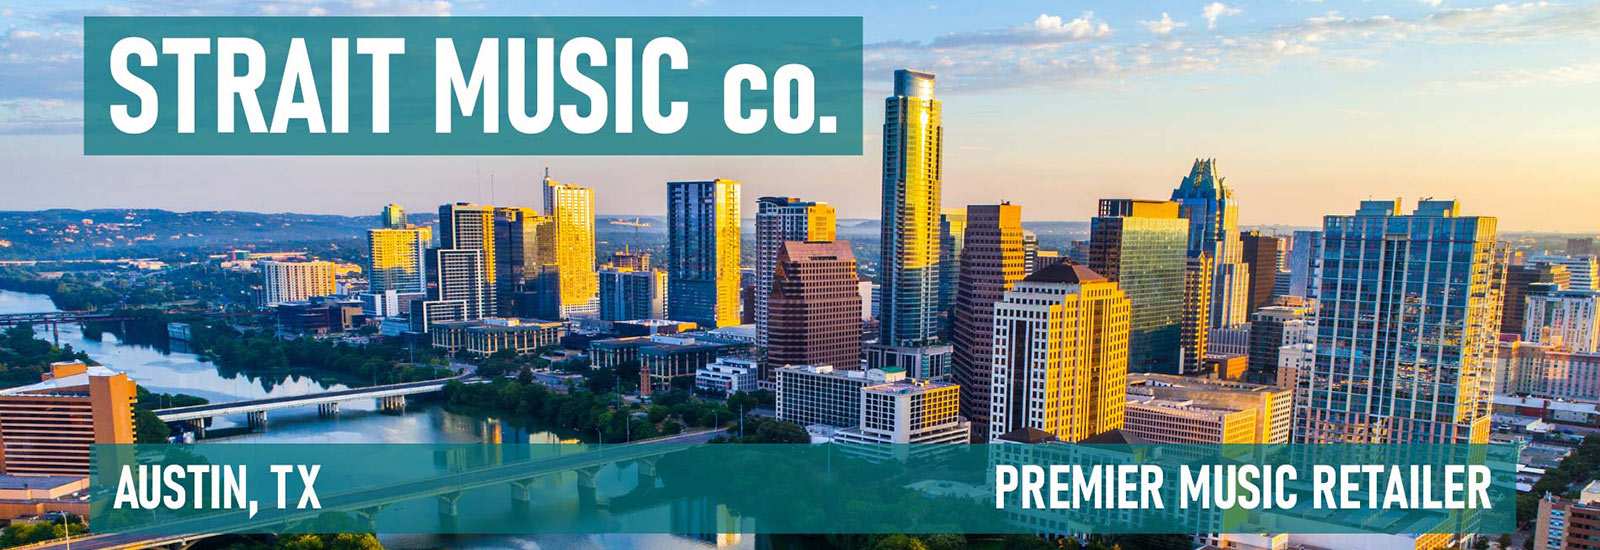 Strait Music Company - Austin TX City Skyline